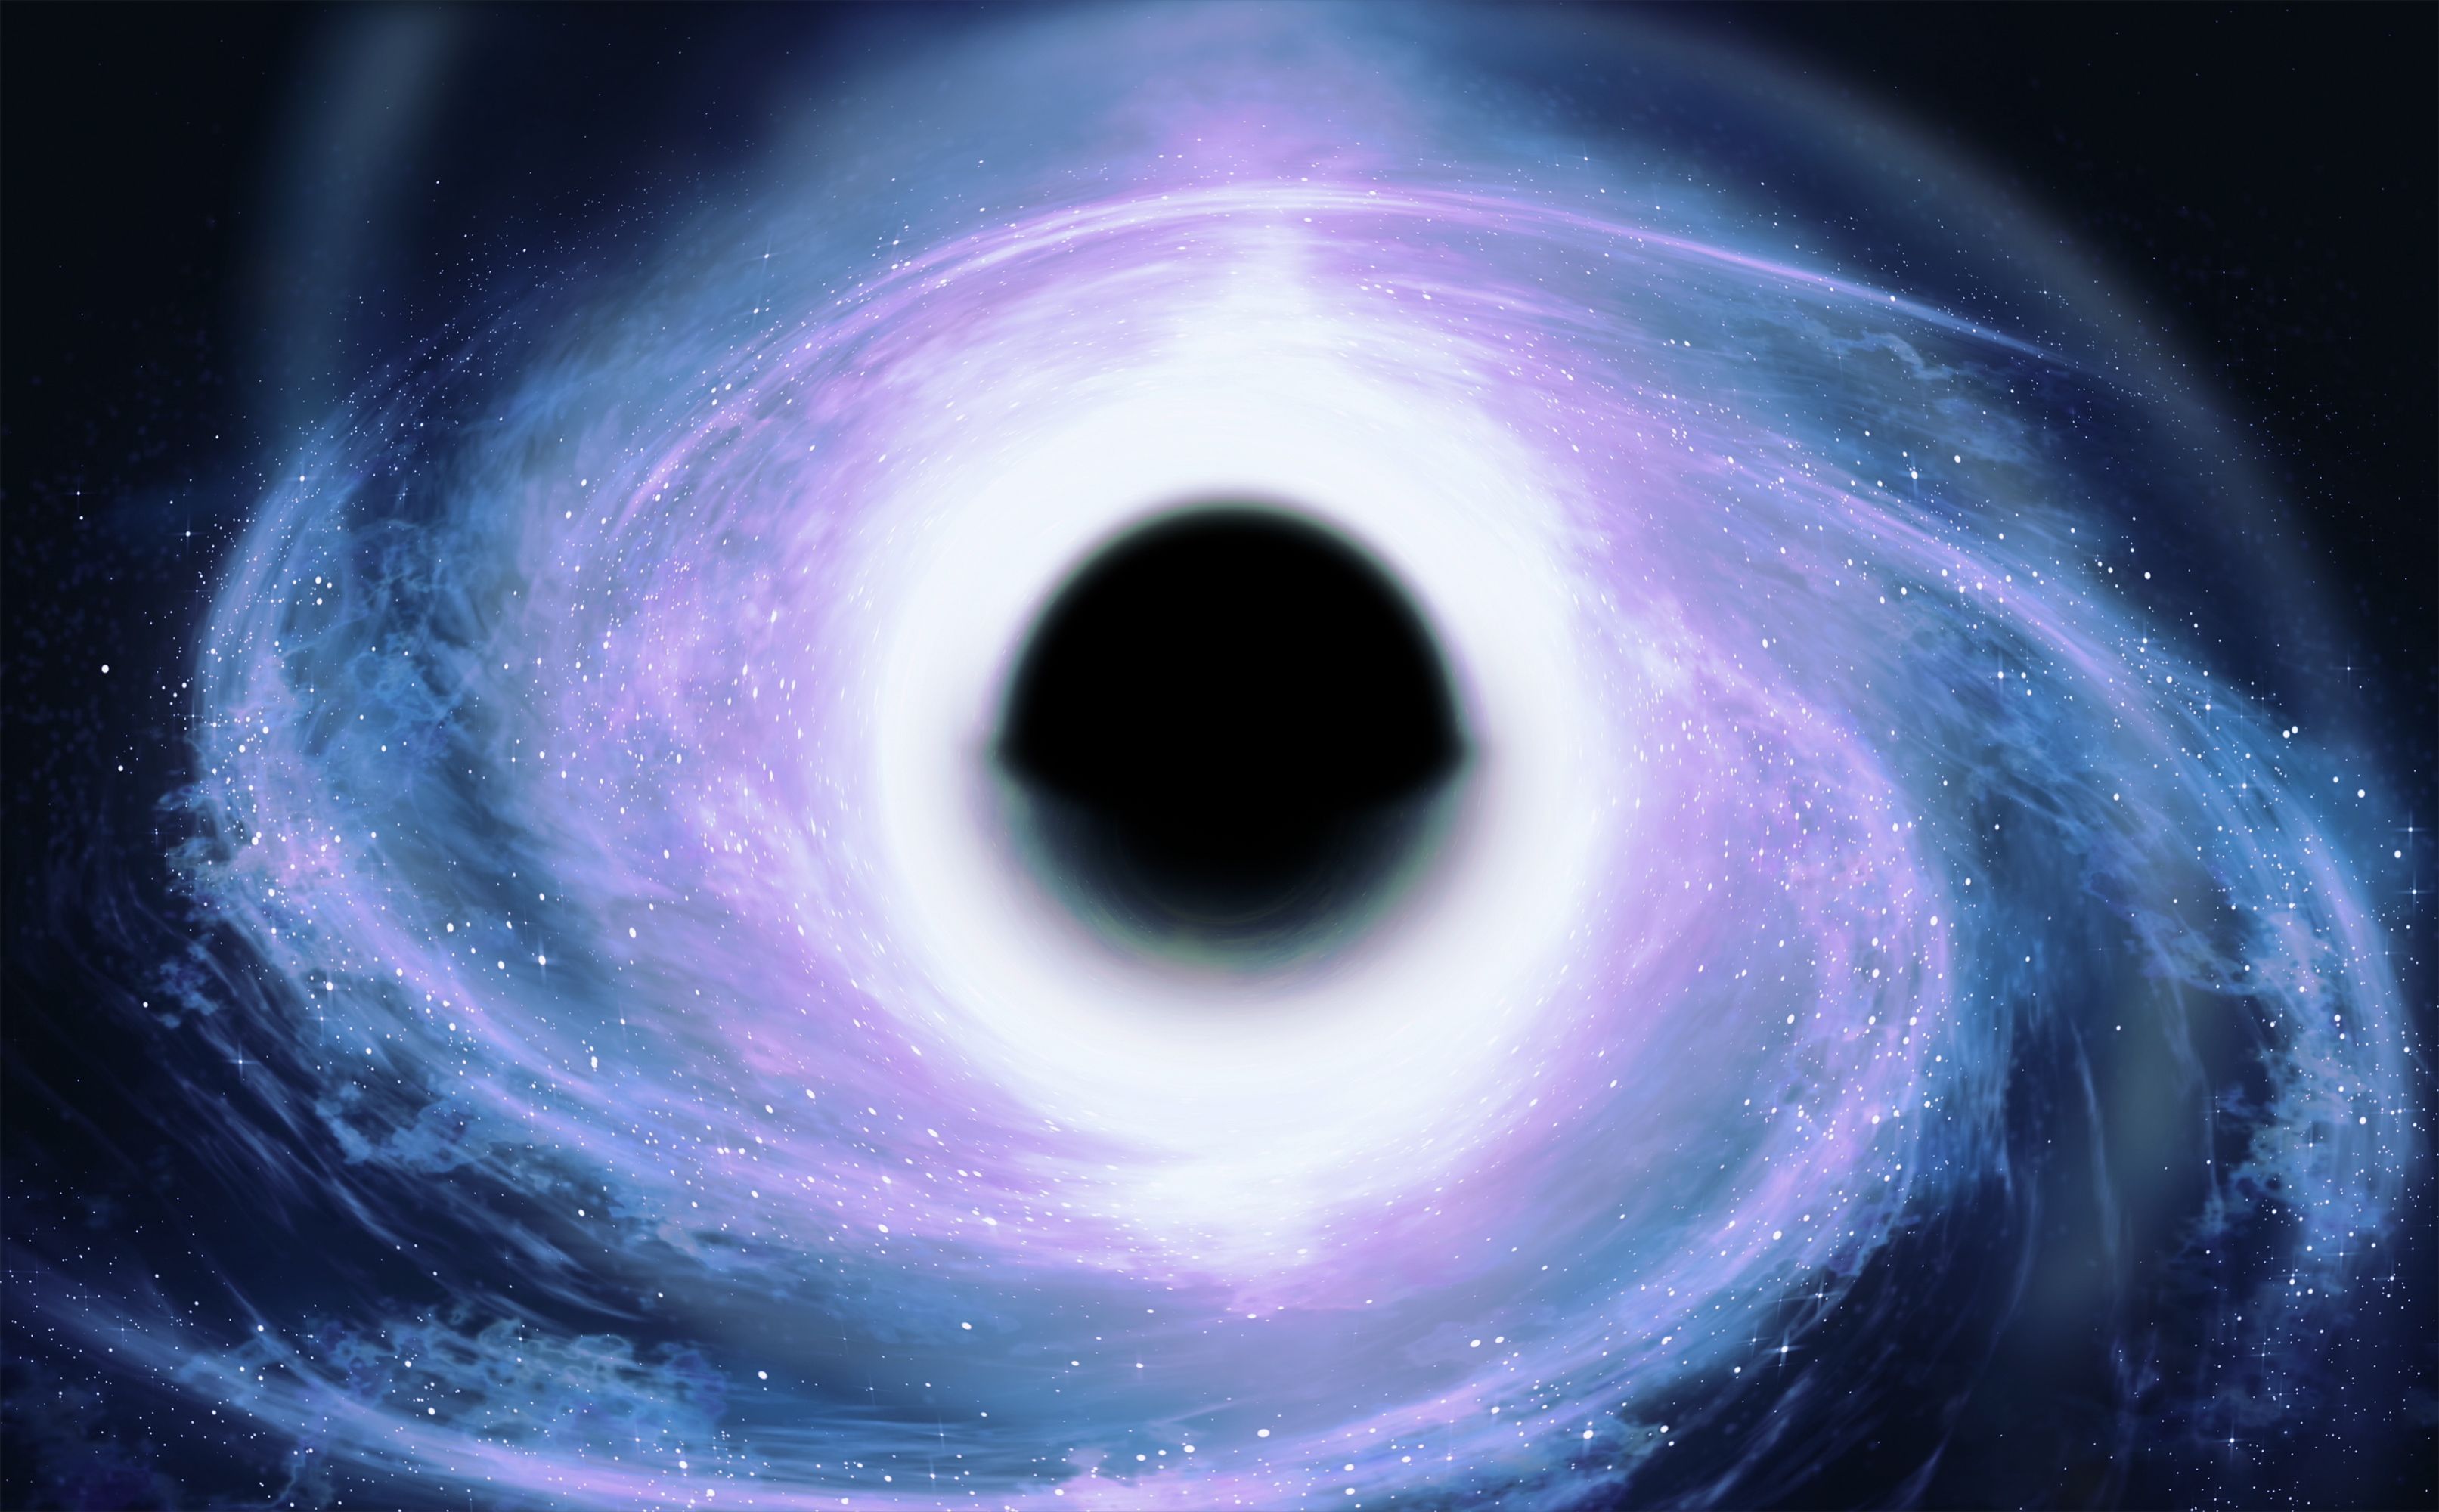 https://hips.hearstapps.com/hmg-prod/images/image-of-open-deep-space-computer-model-black-hole-royalty-free-image-1699297203.jpg